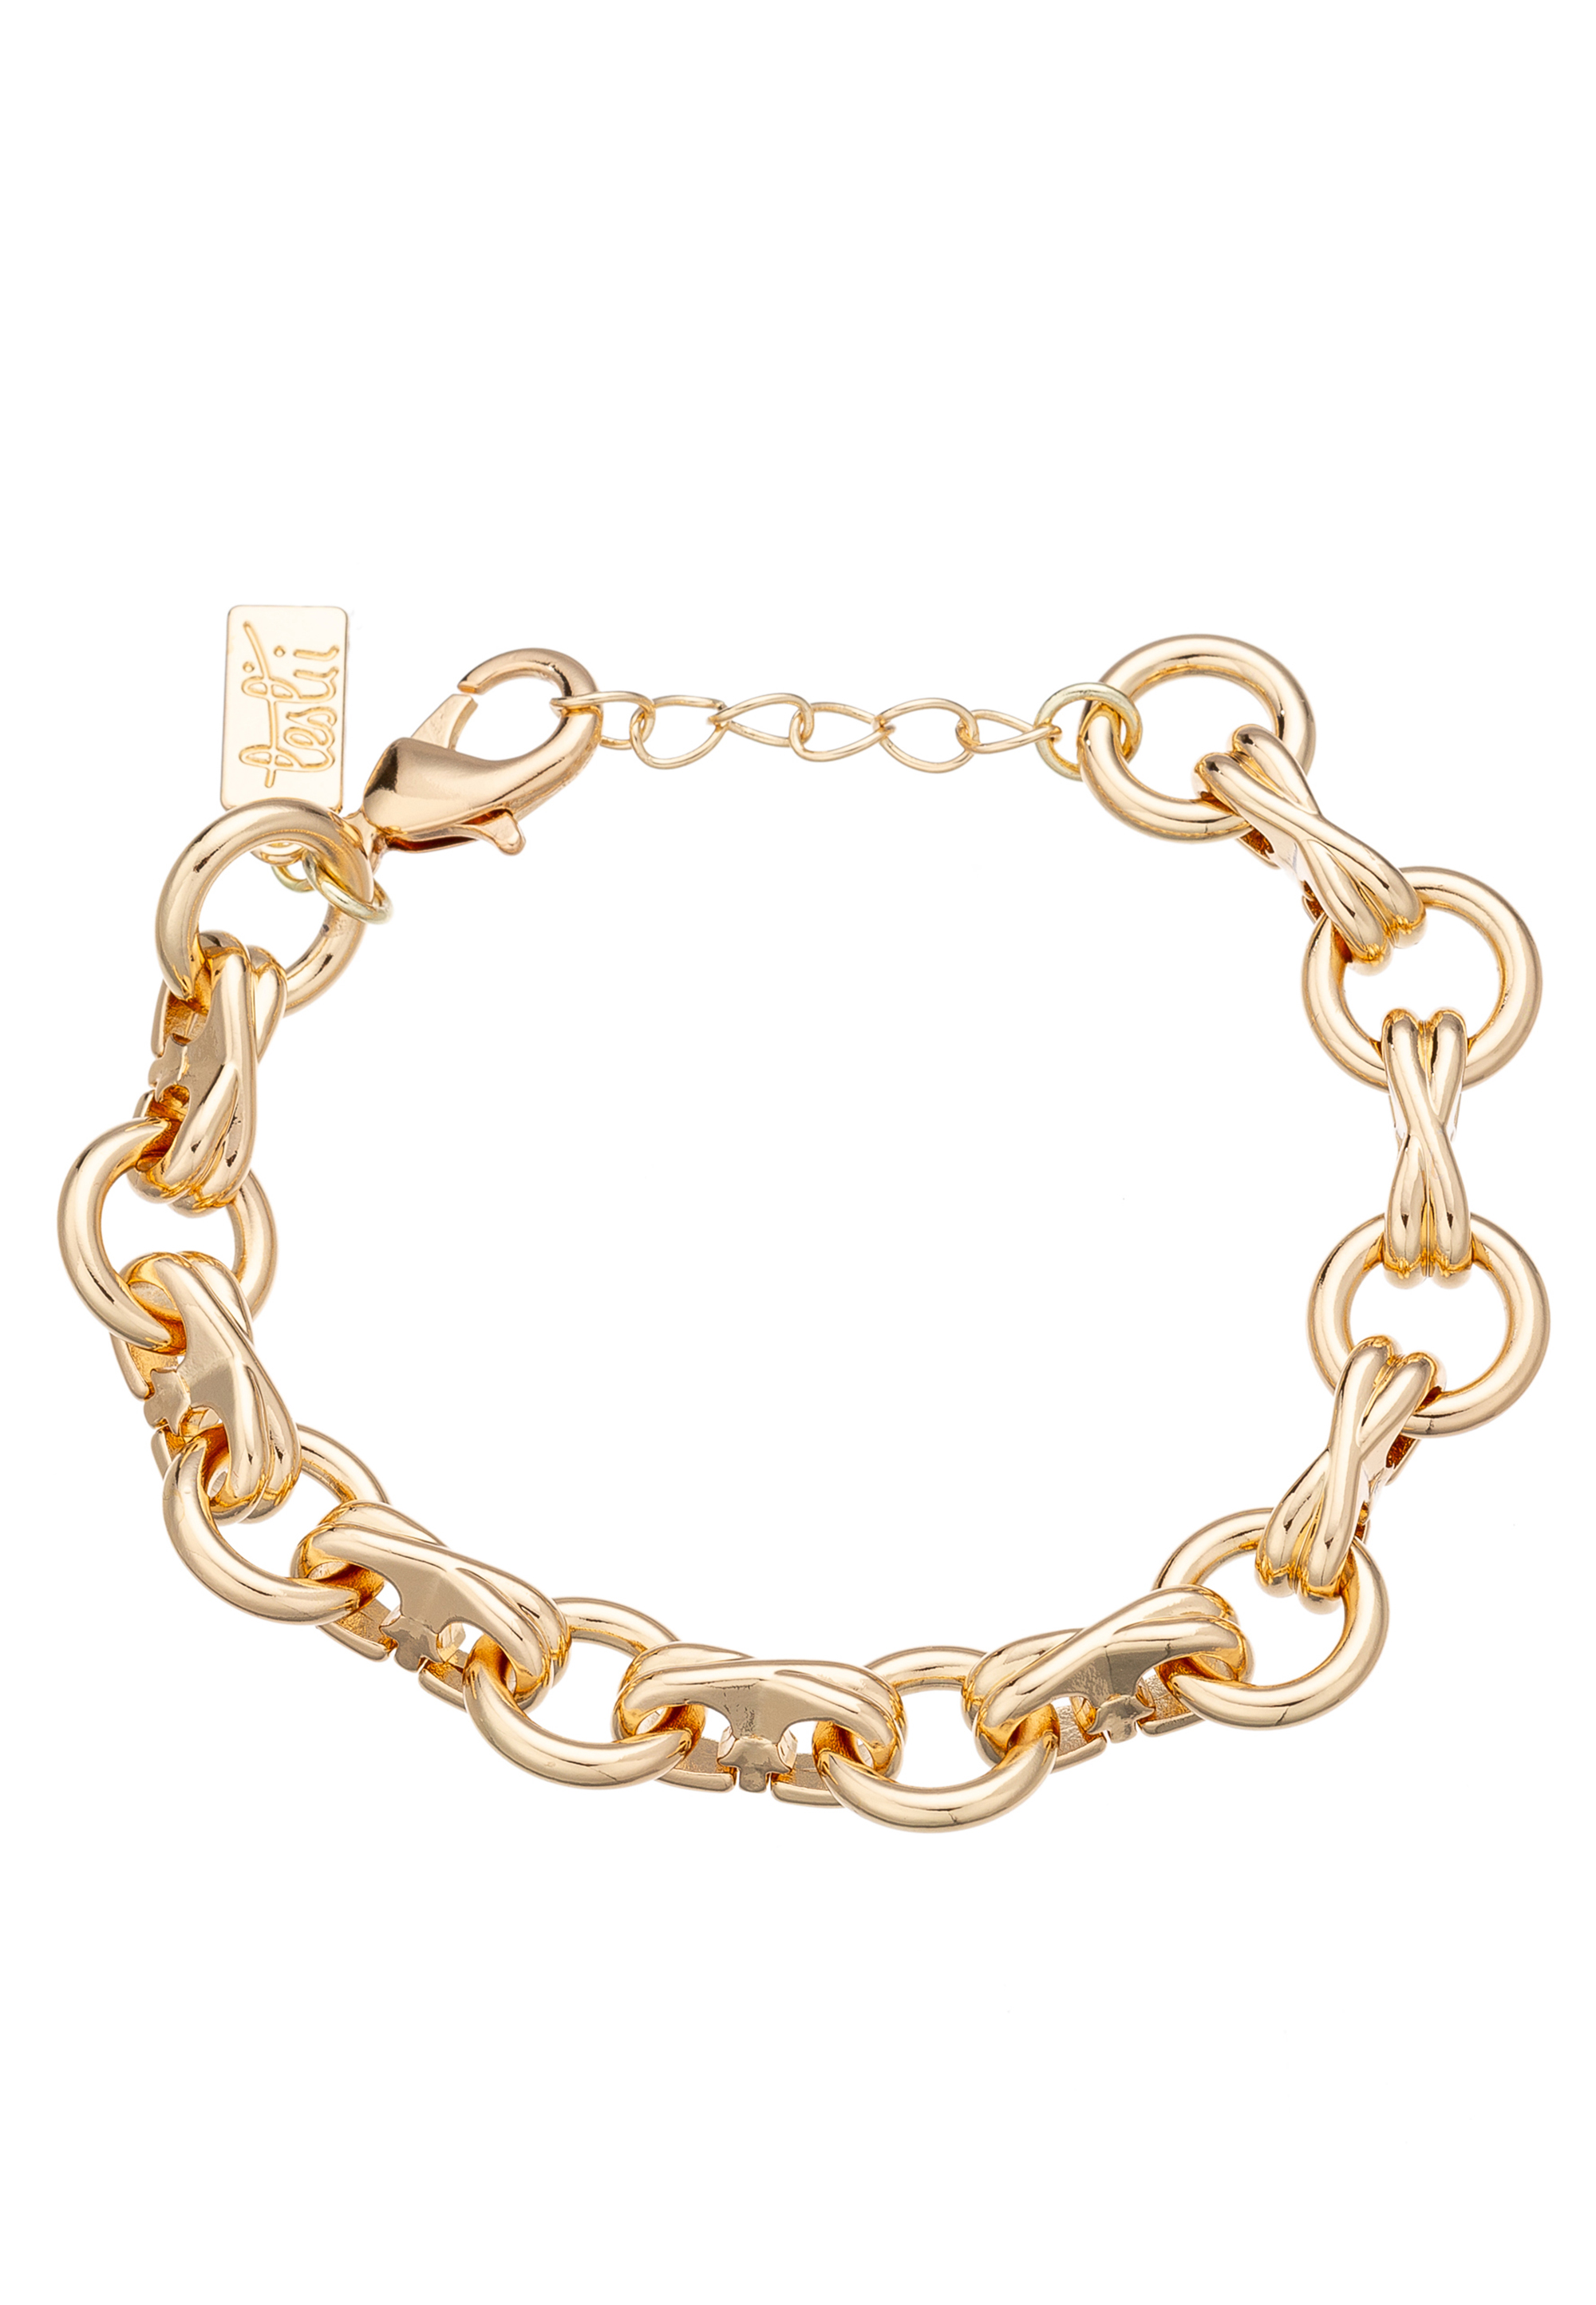 Leslii Statement Armband | Shop Leslii Gliedern in Gold mit Online